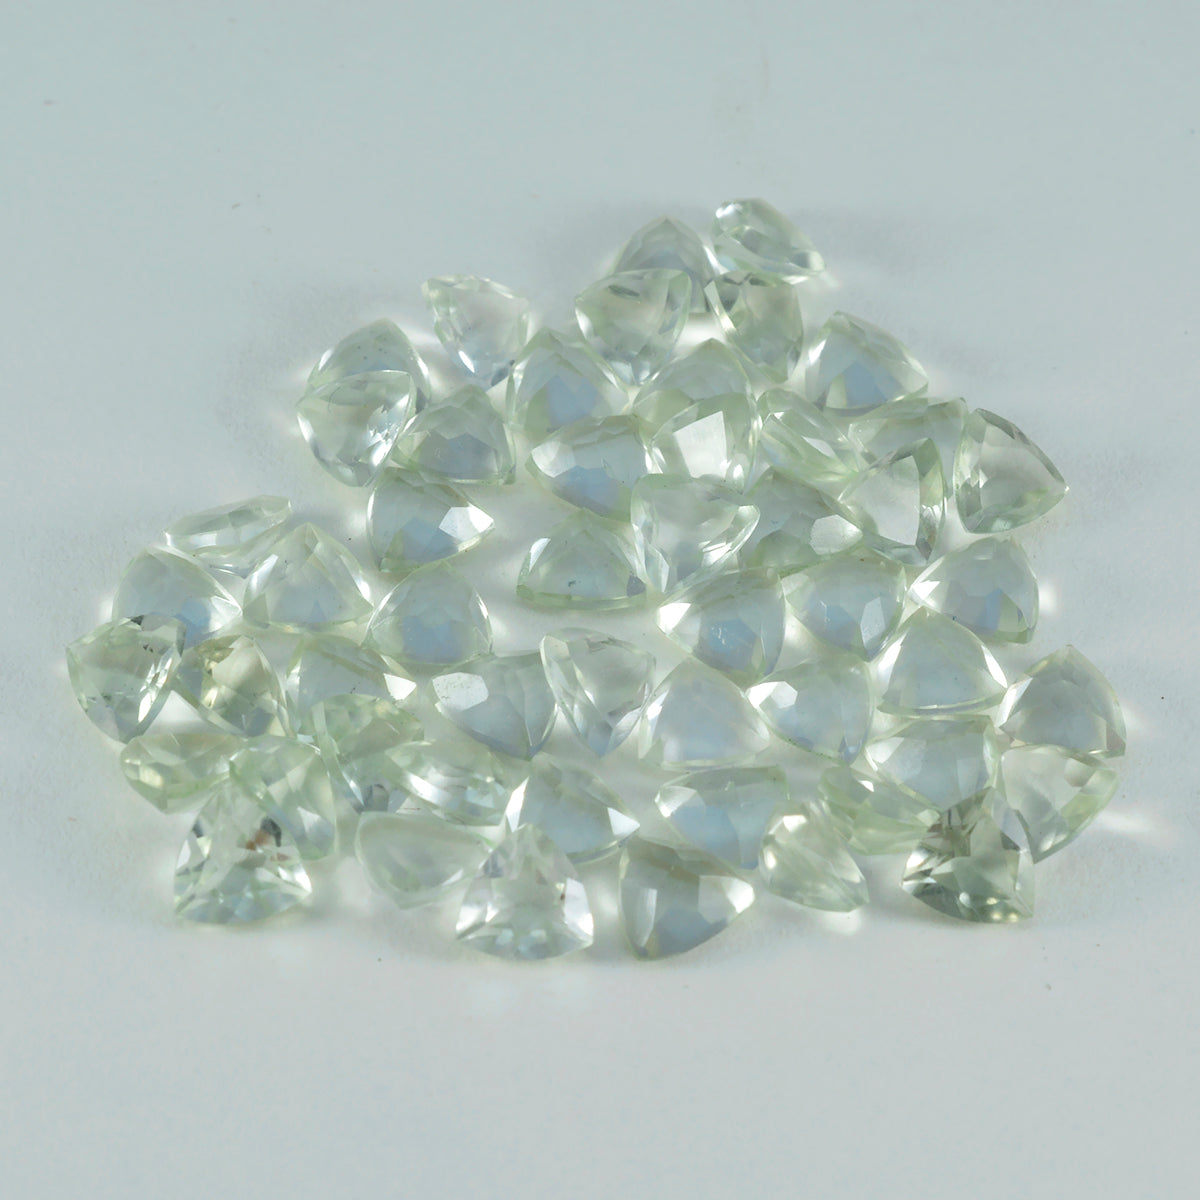 Riyogems 1PC Green Amethyst Faceted 5x5 mm Trillion Shape Nice Quality Loose Gems